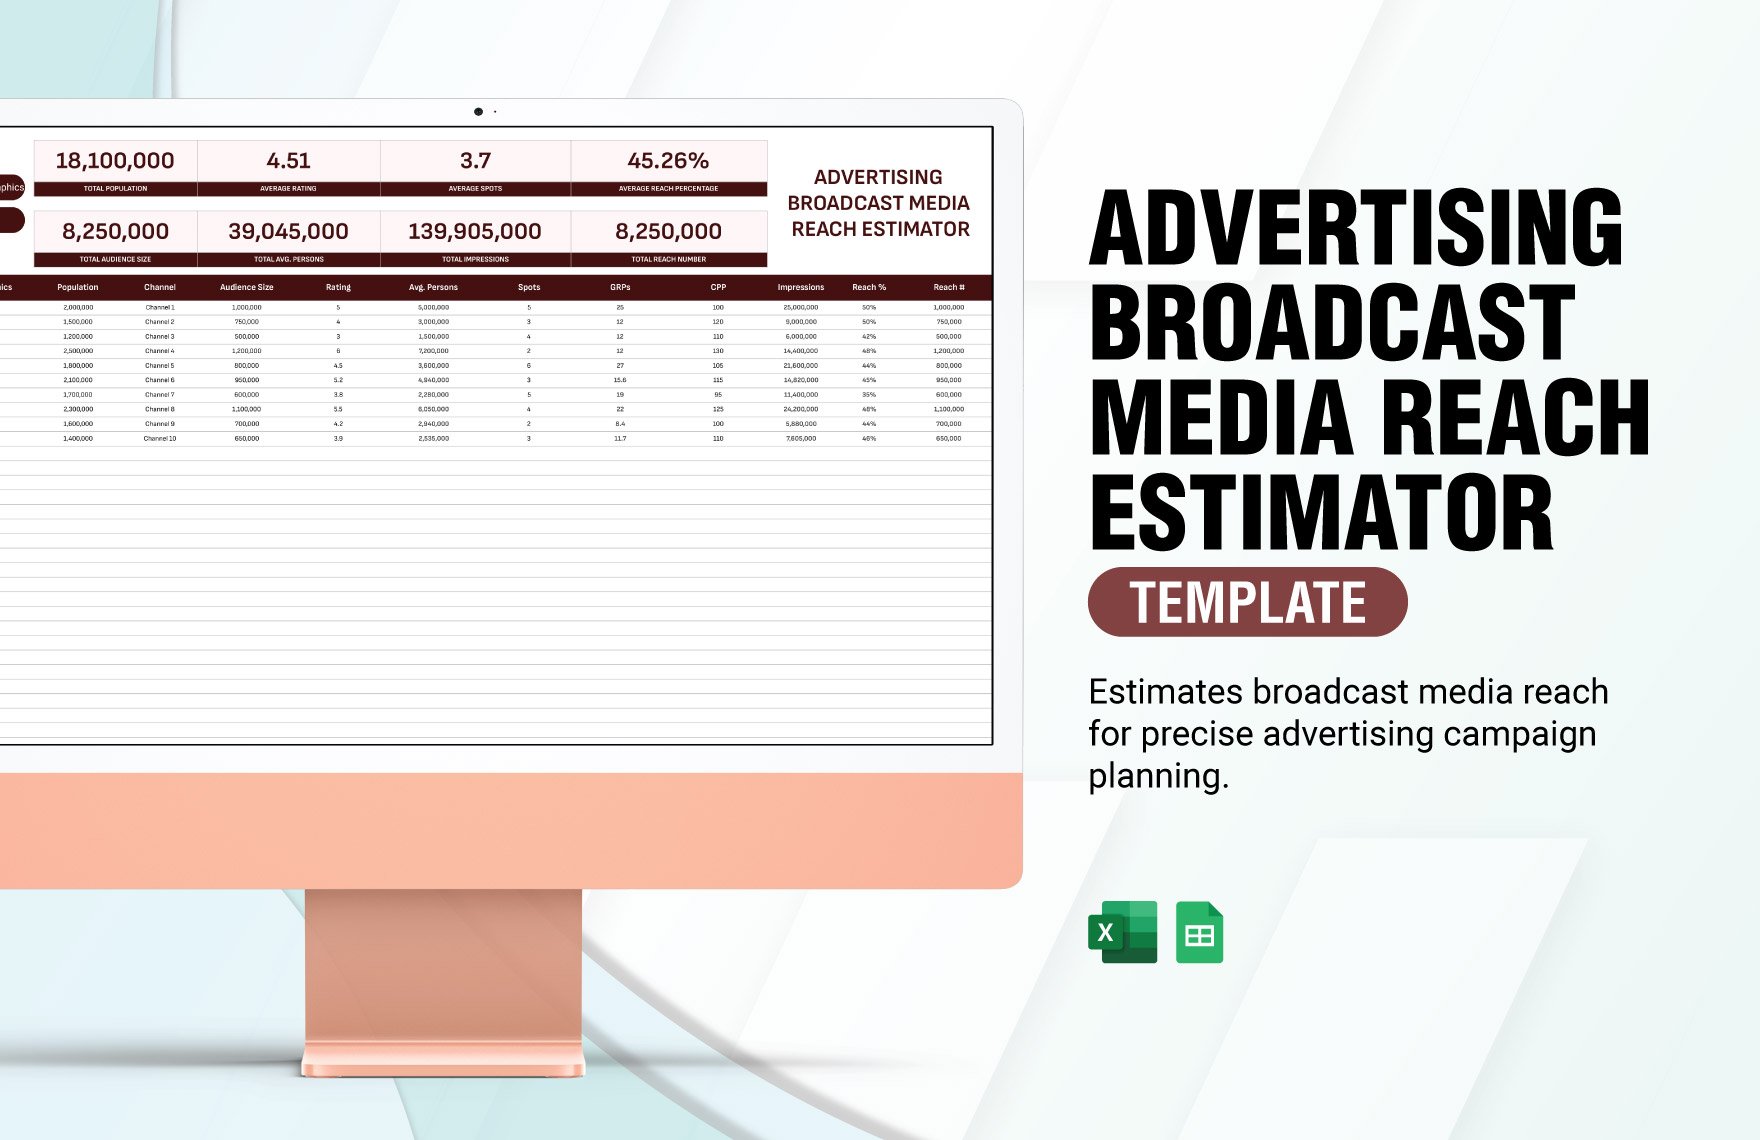 Advertising Broadcast Media Reach Estimator Template in Excel, Google Sheets